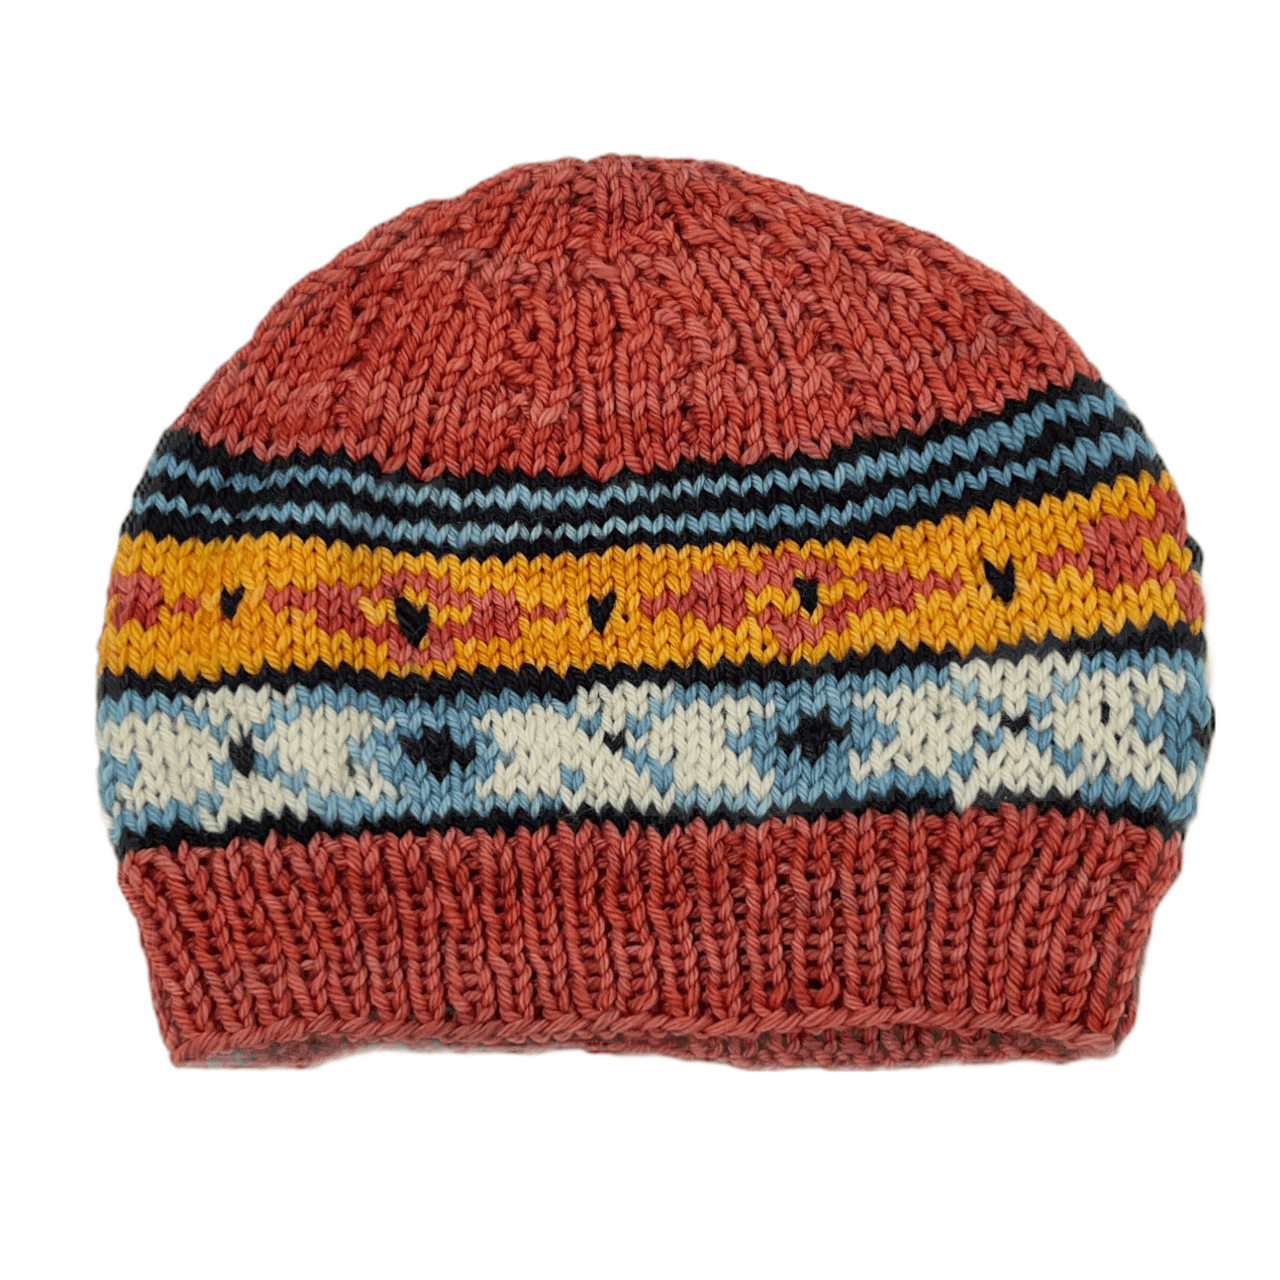 Guadalupe Mountains Hat pattern | Stunning String Studio